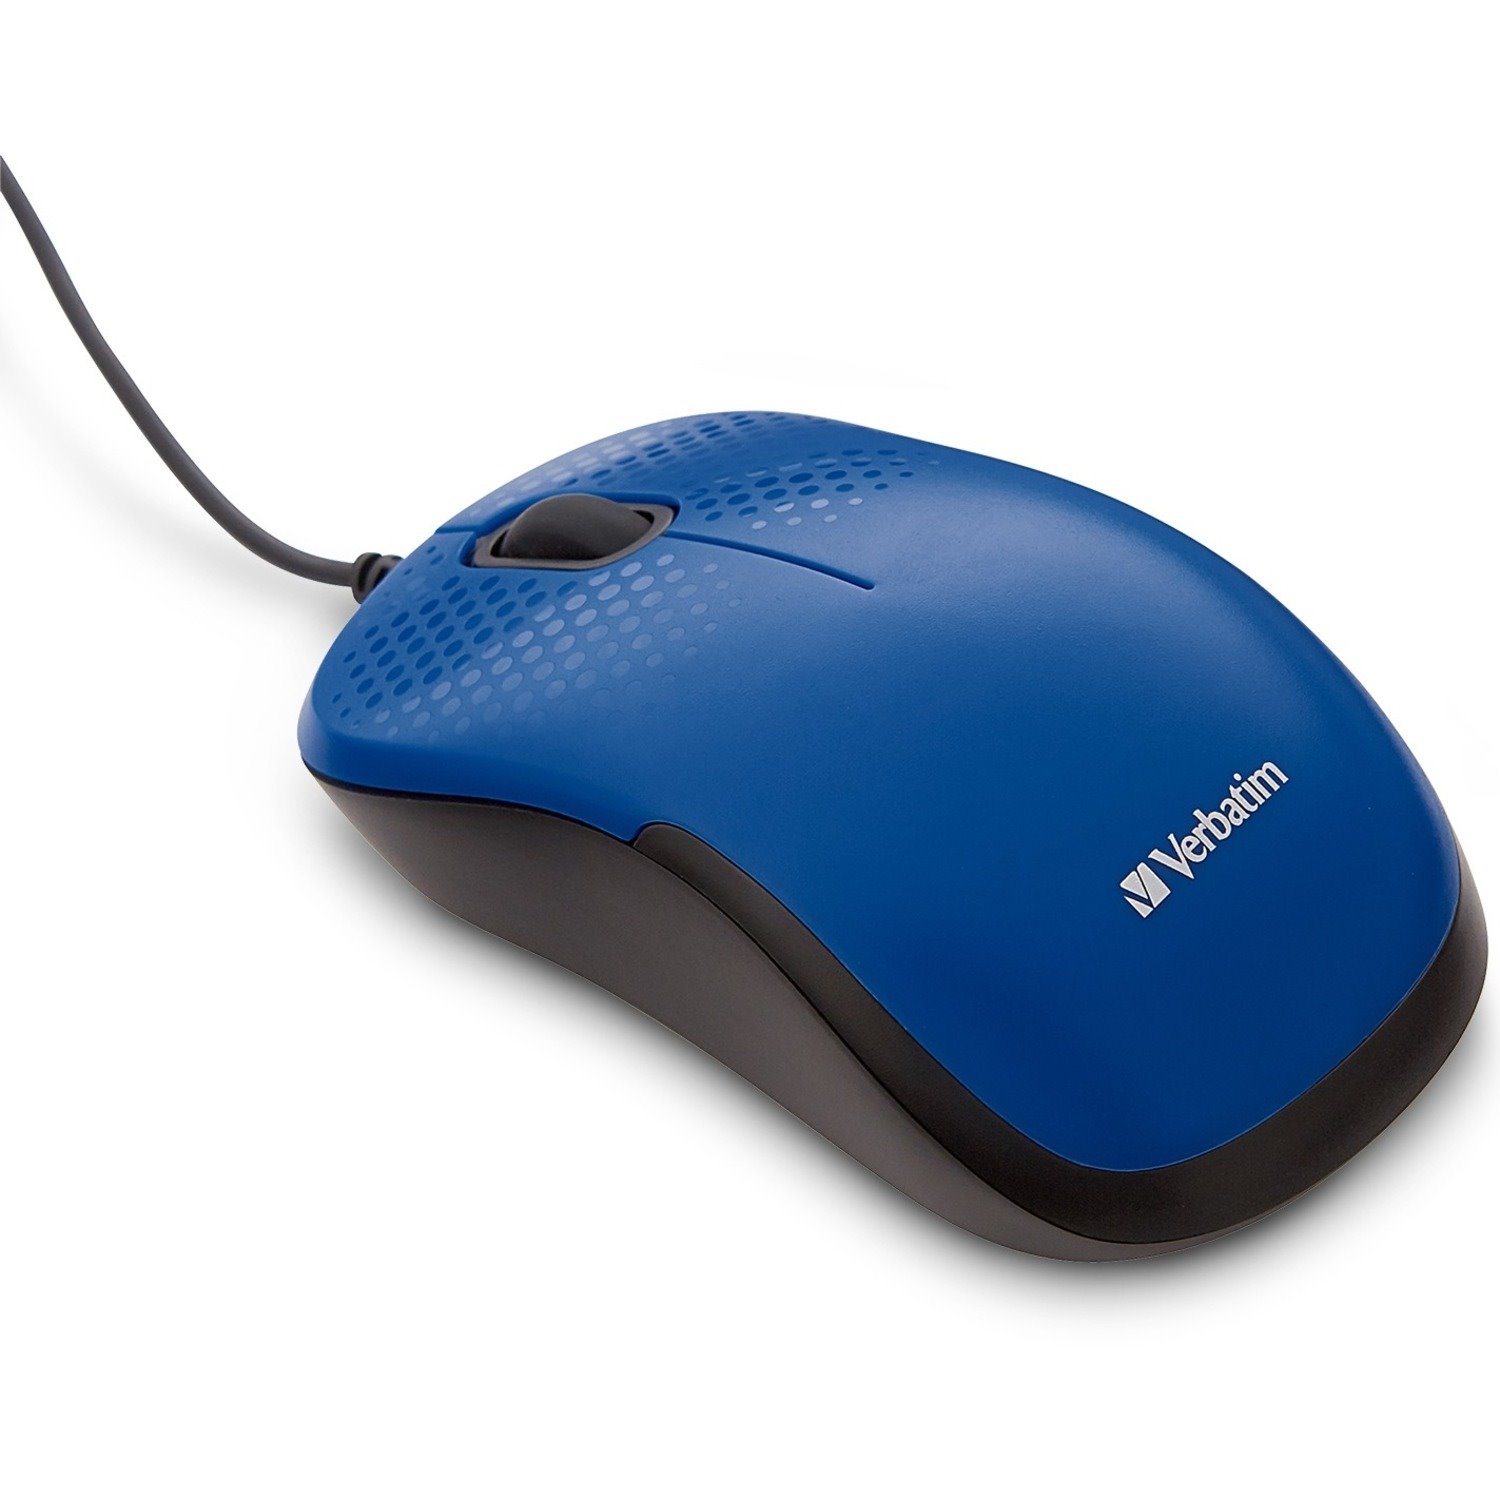 Verbatim Silent Corded Optical Mouse - Blue